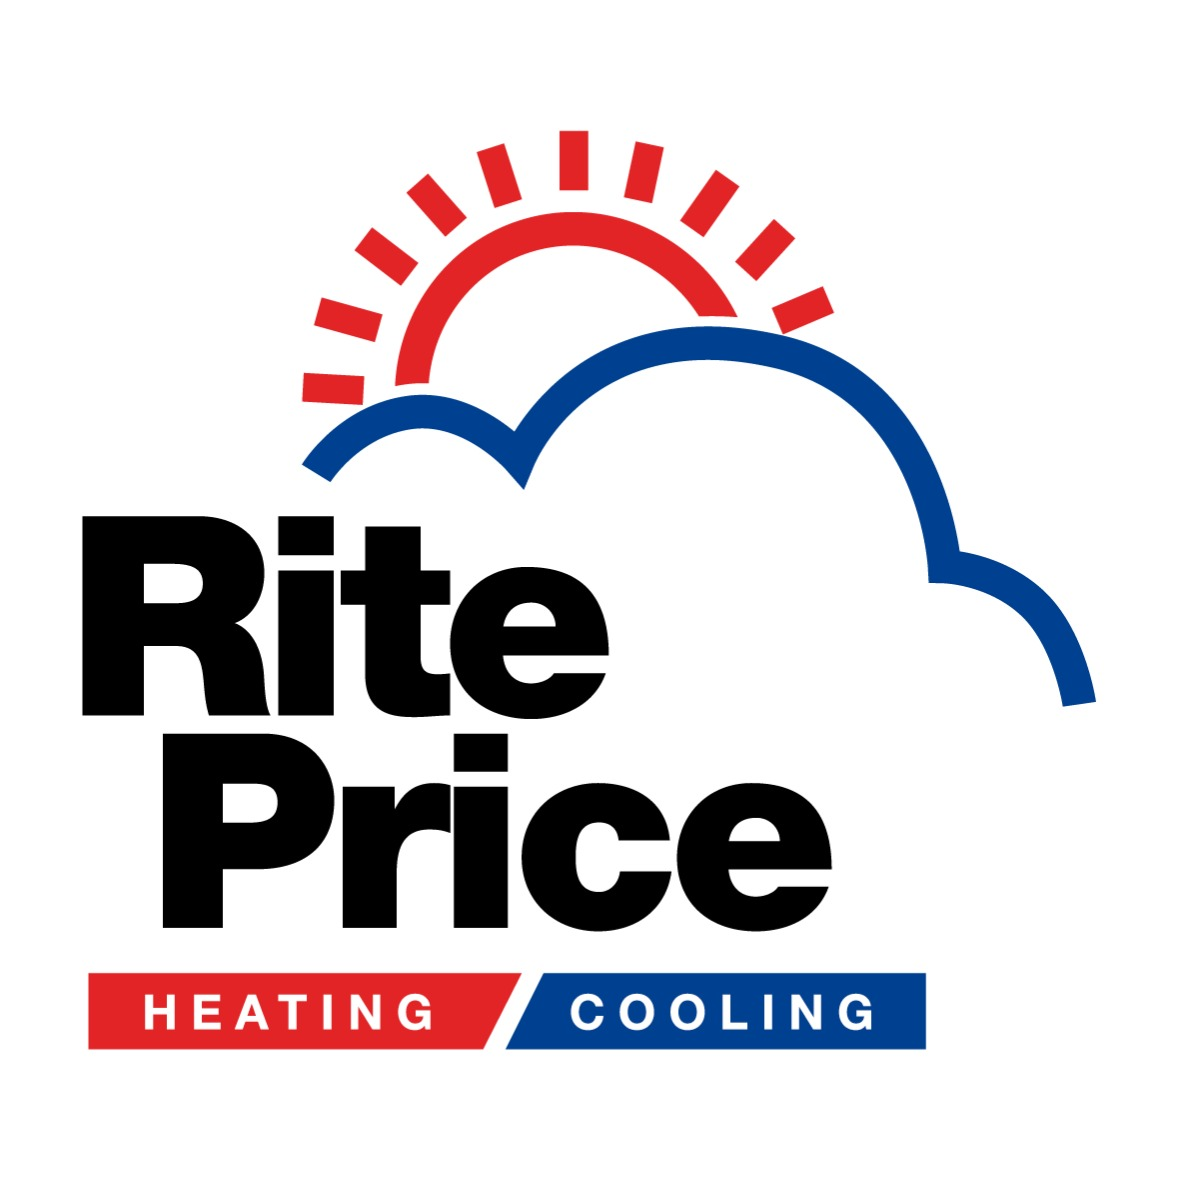 Rite Price Heating & Cooling Adelaide Evandale (08) 8261 2277